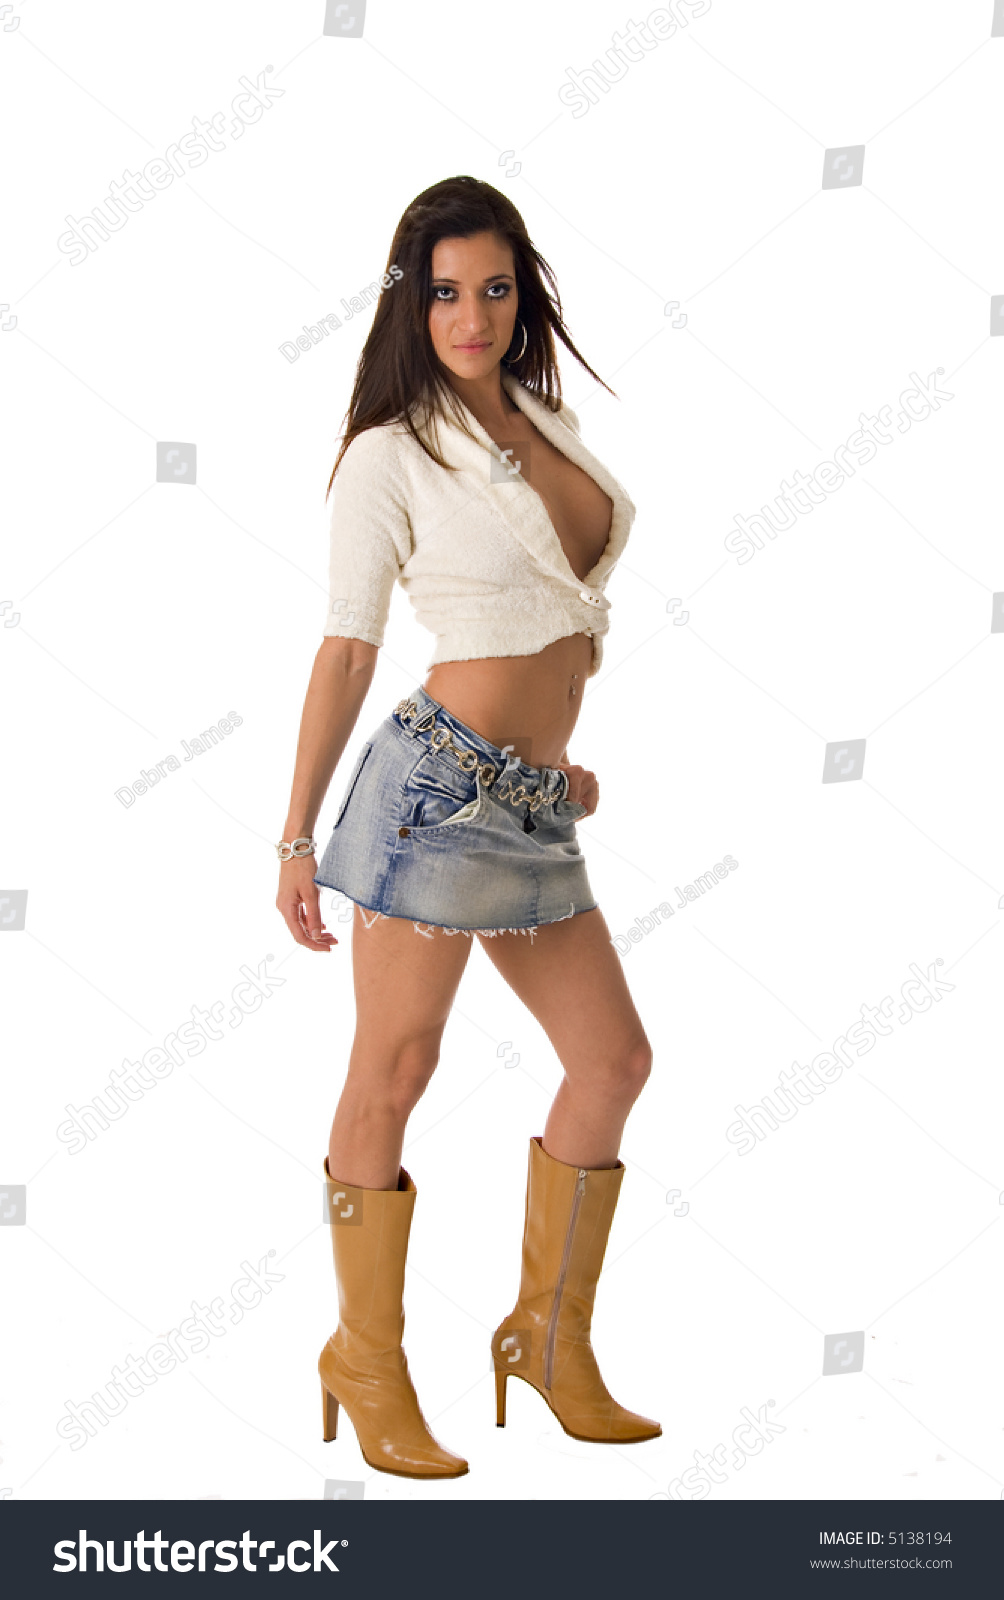 hot women in knee high boots